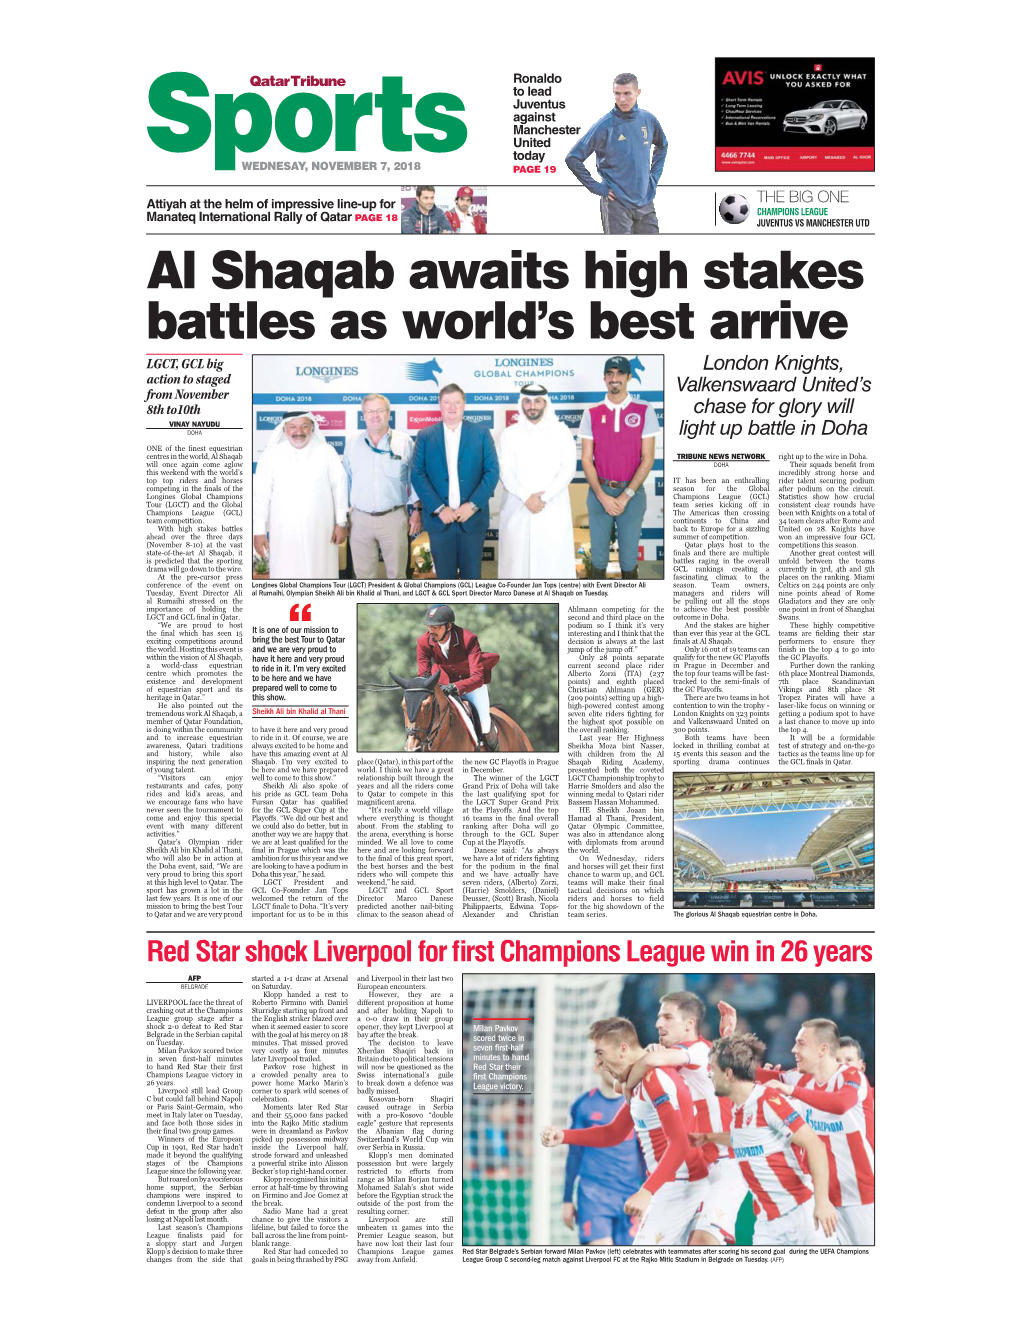 Al Shaqab Awaits High Stakes Battles As World's Best Arrive